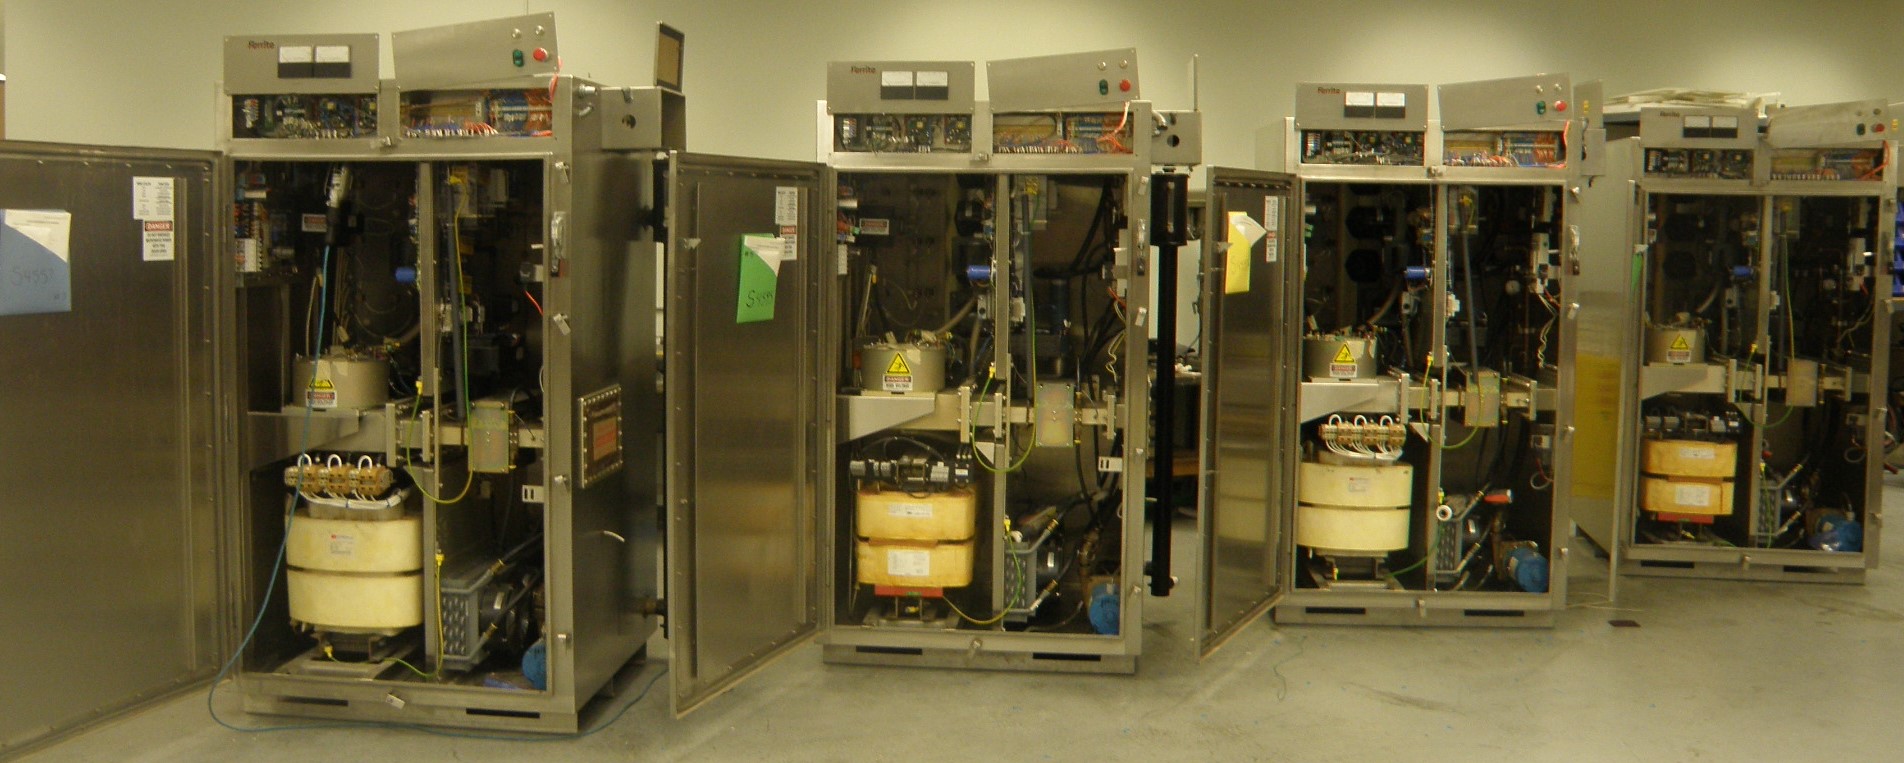 100kW Microwave Generators